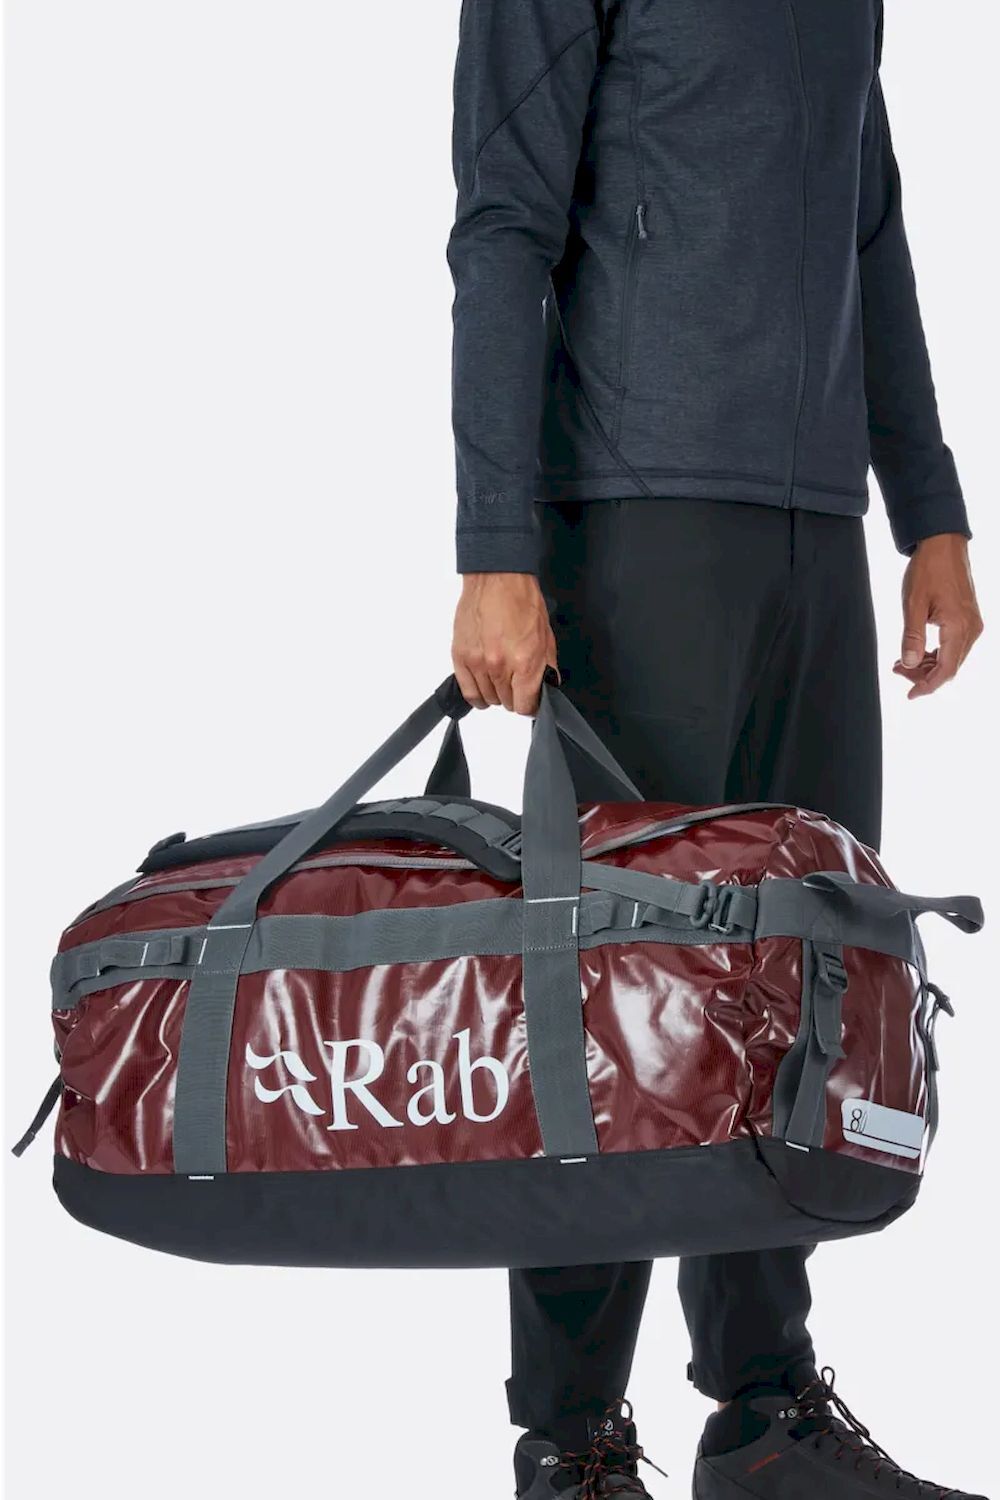 Rab Expedition Kitbag 80 - Travel backpack - Men's